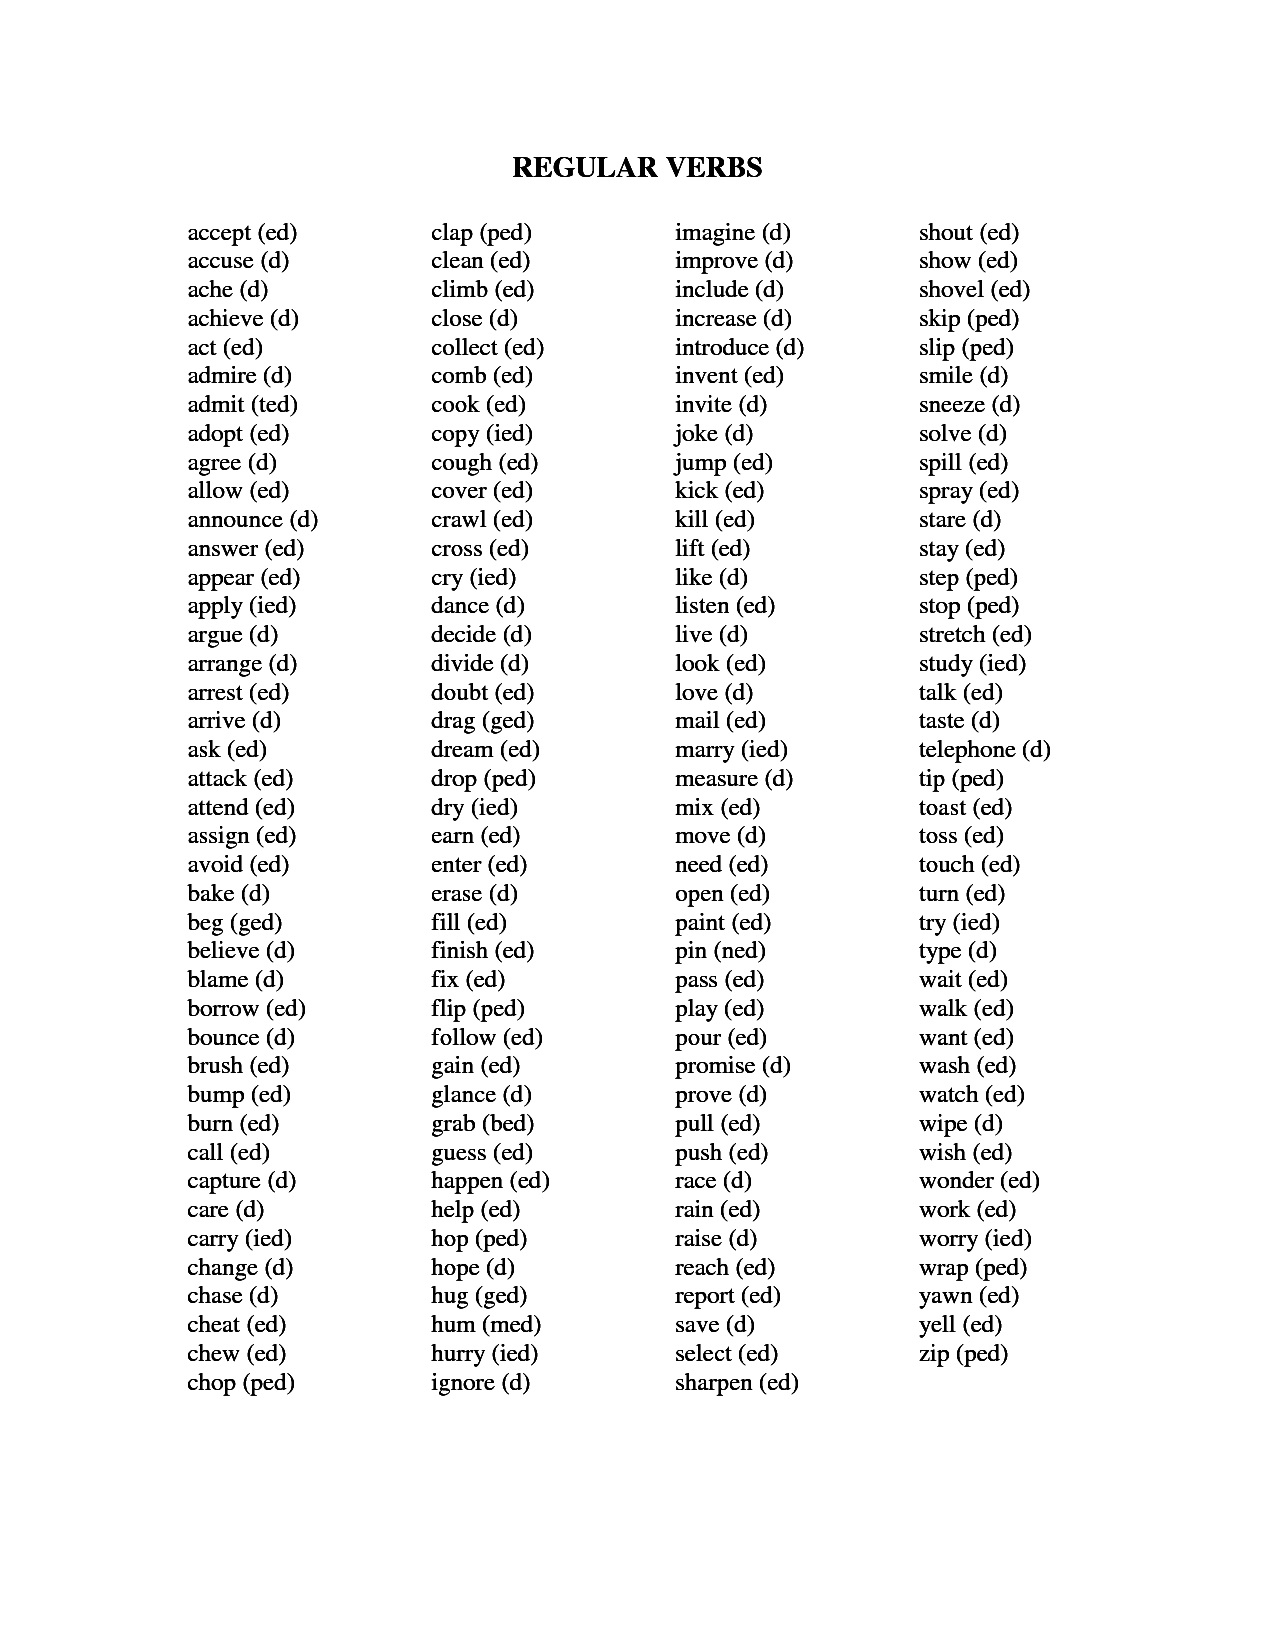 Regular and Irregular Verbs List